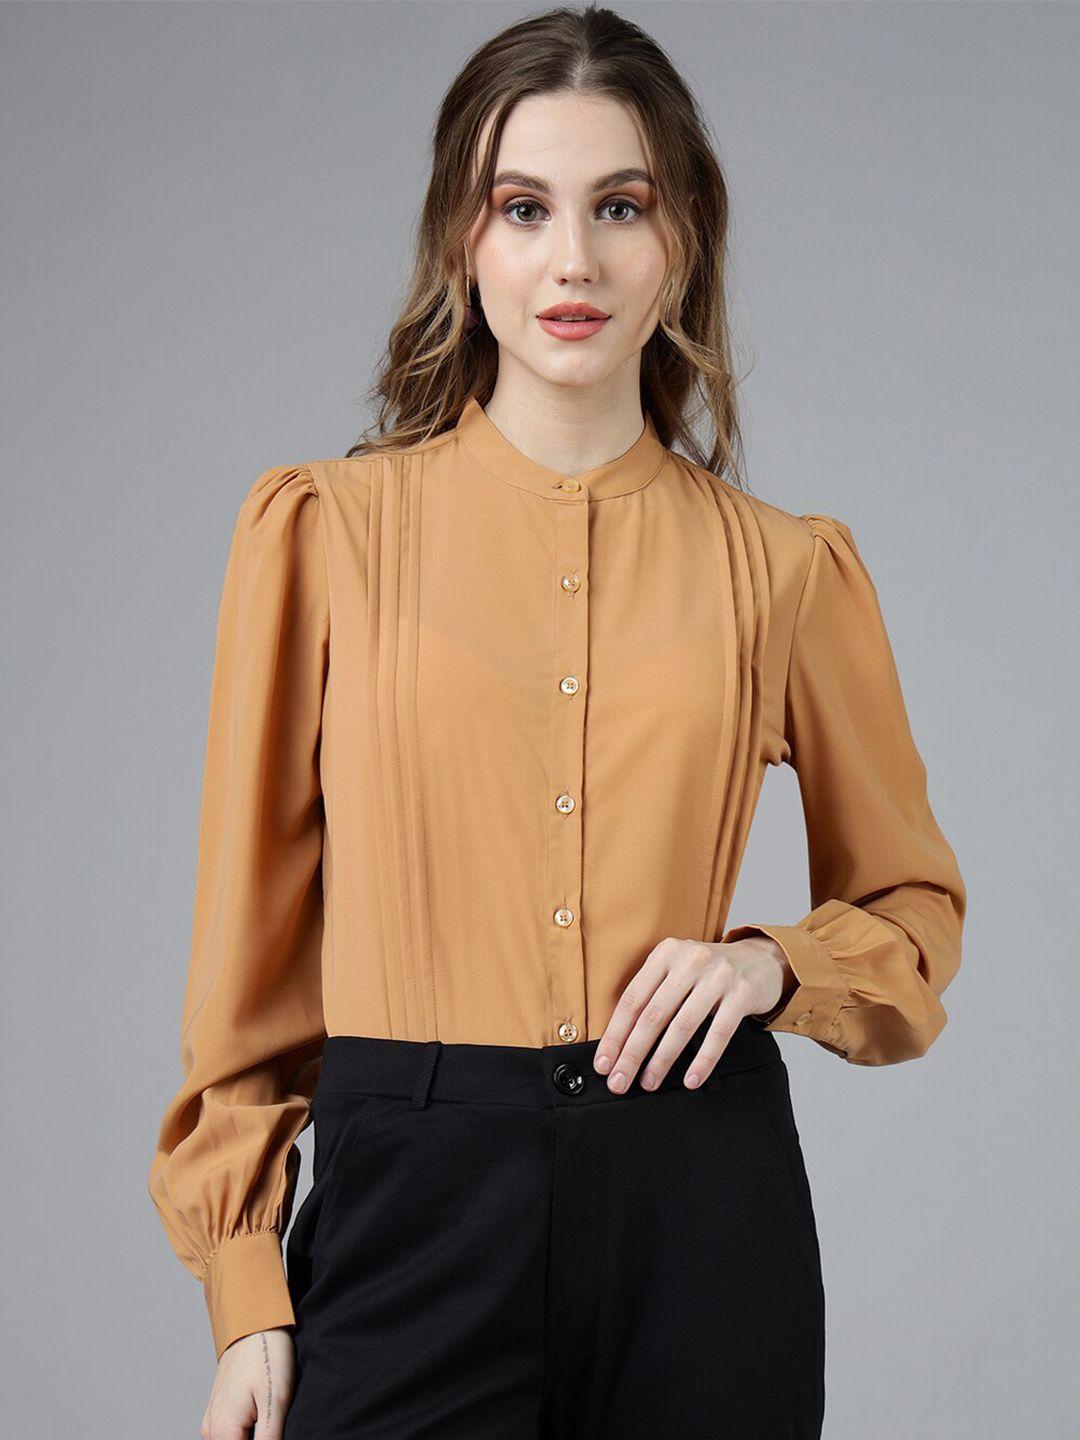 fithub-mandarin-collar-cuffed-sleeves-pin-tucks-cotton-shirt-style-top